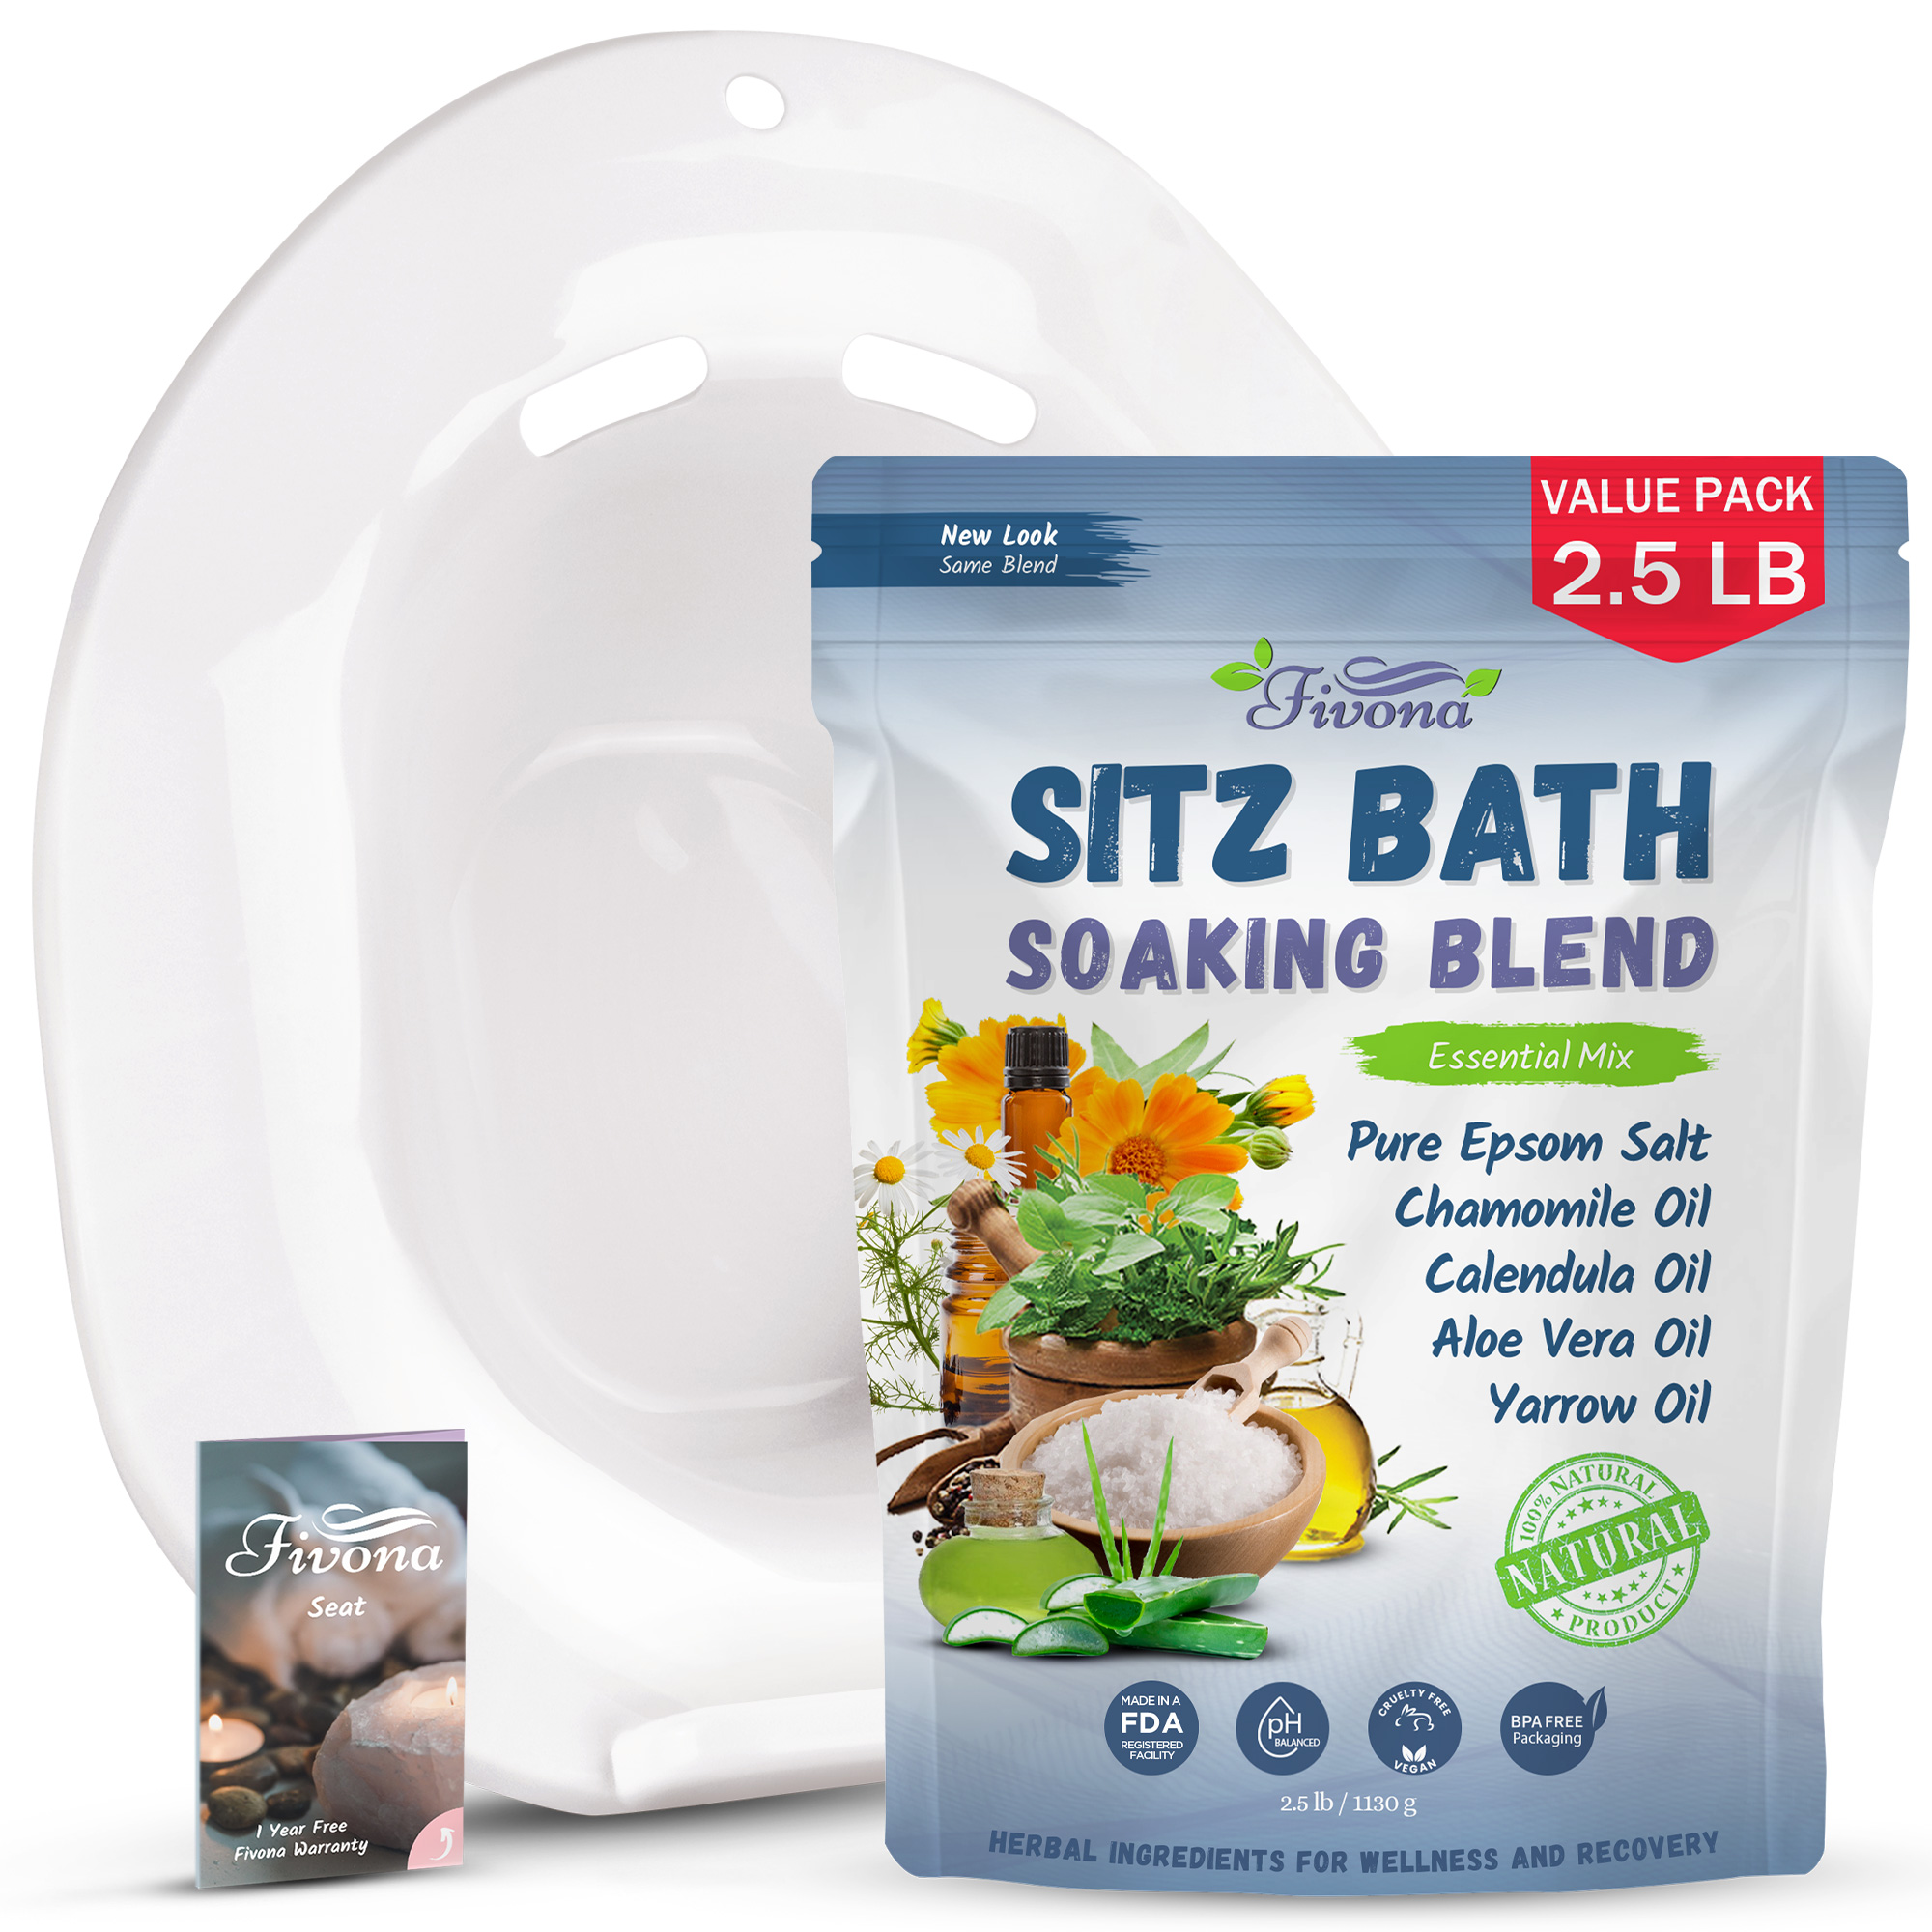 Sitz Bath Kit Salt 2.5 LB Kit for Hemorrhoids and Postpartum Care Epsom with Oils Blend - image 1 of 8